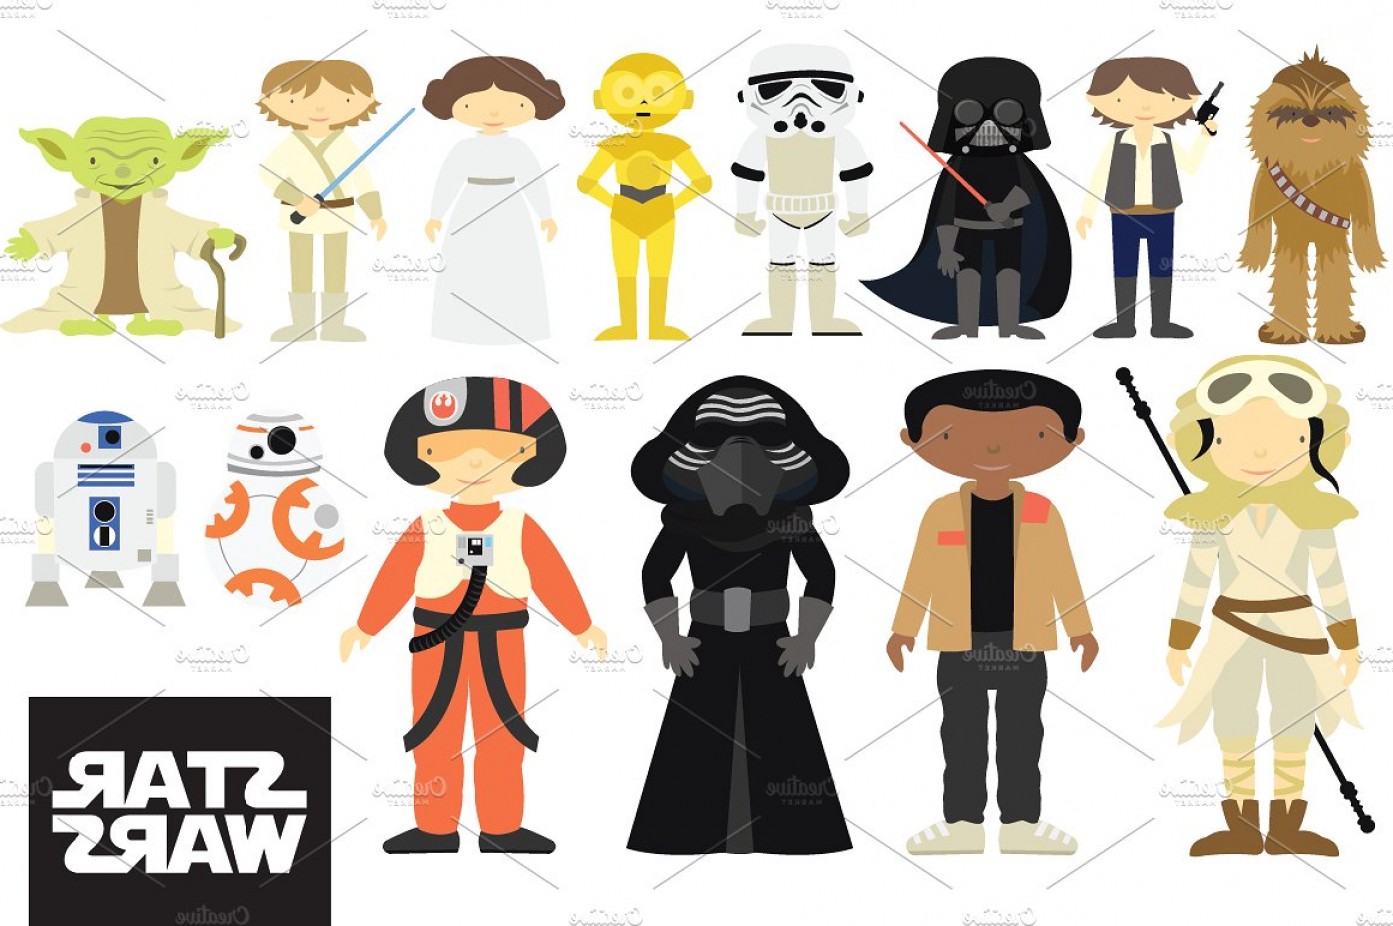 Star wars characters.